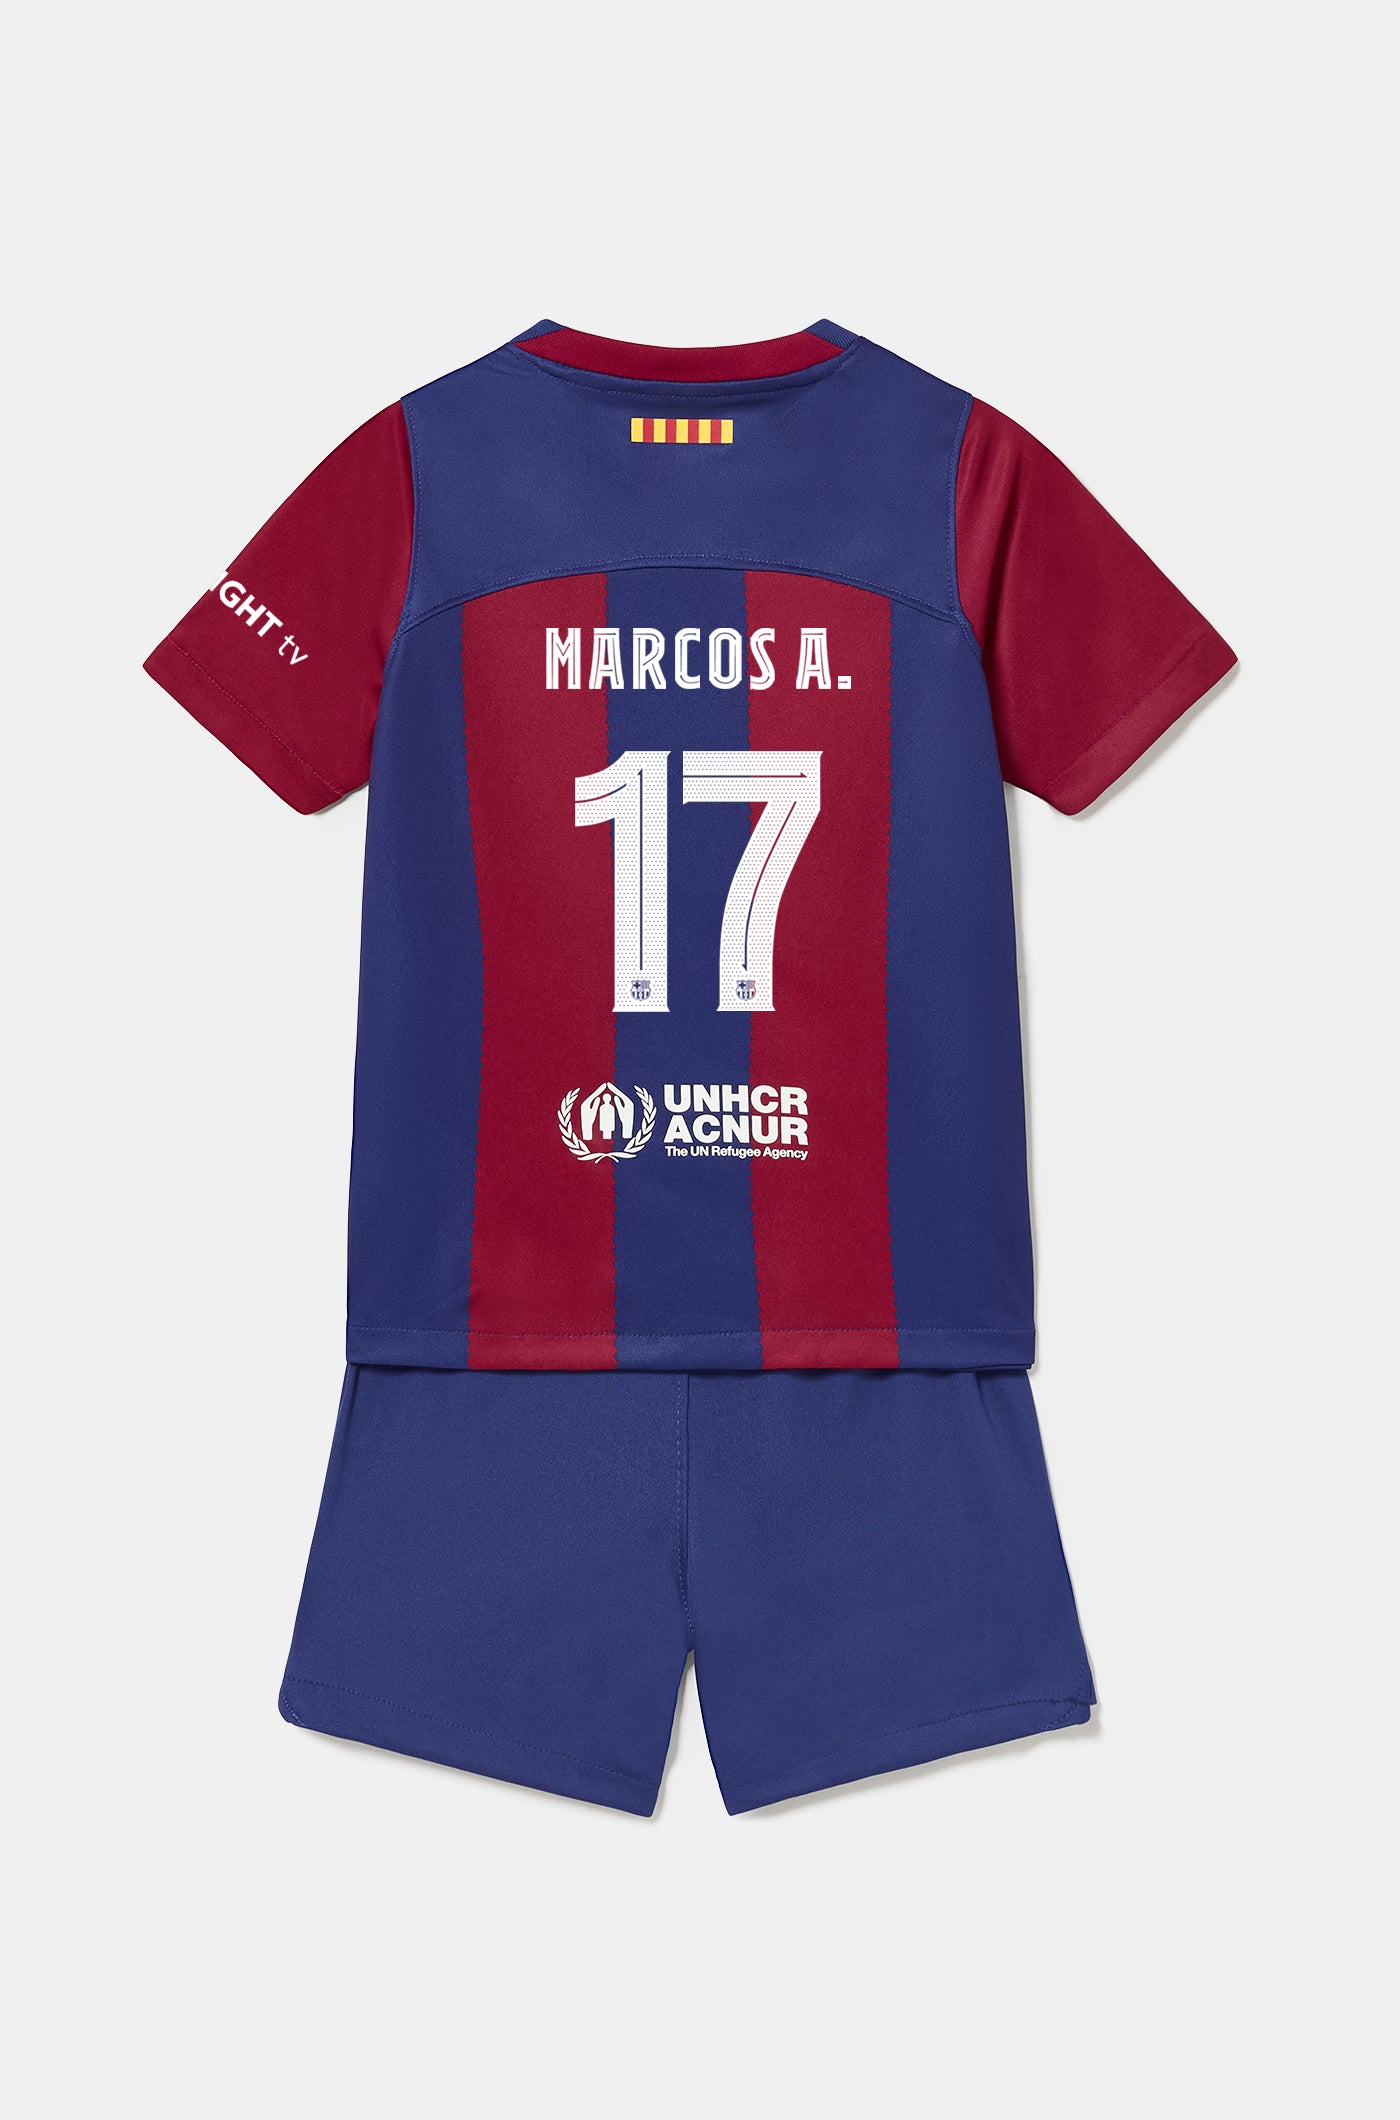 Conjunto primera equipación FC Barcelona 23/24 - Niño/a pequeño/a - MARCOS A.